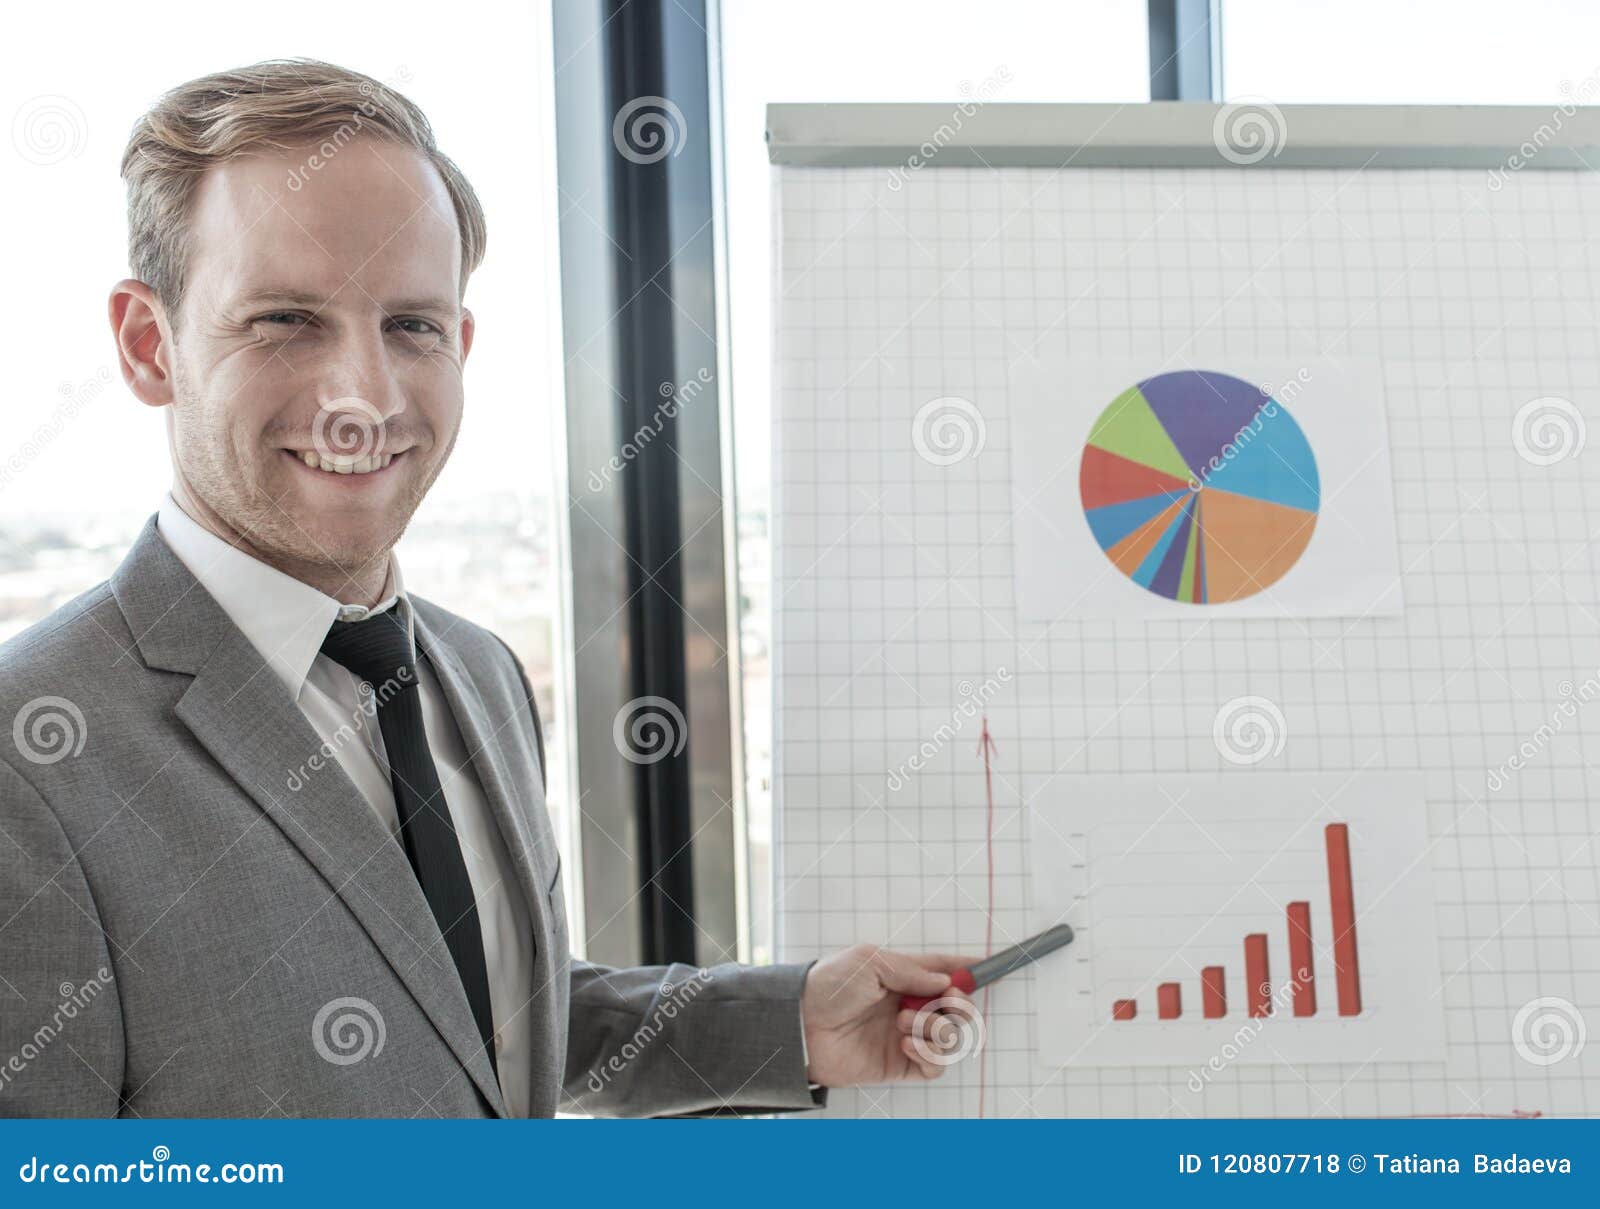 How To Make A Flip Chart Presentation